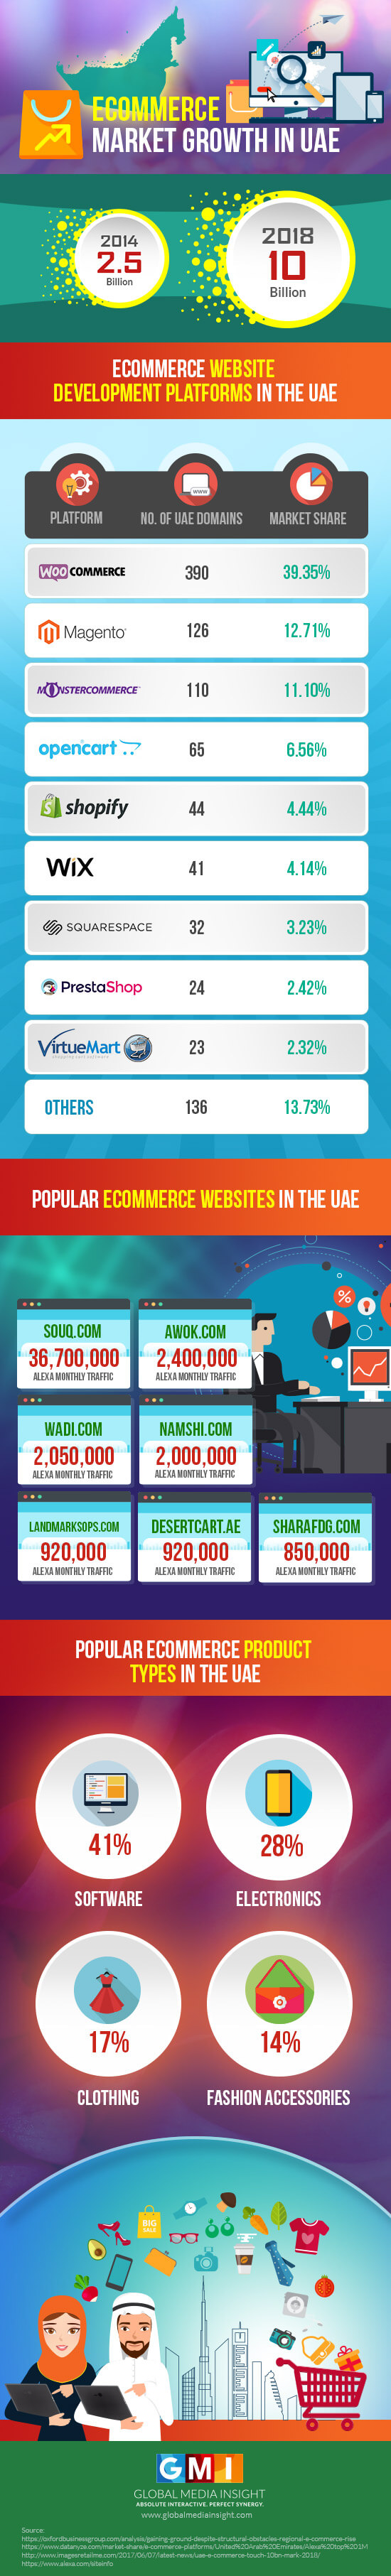 UAE e-Commerce Market Trends & Development Platforms [Infographic]